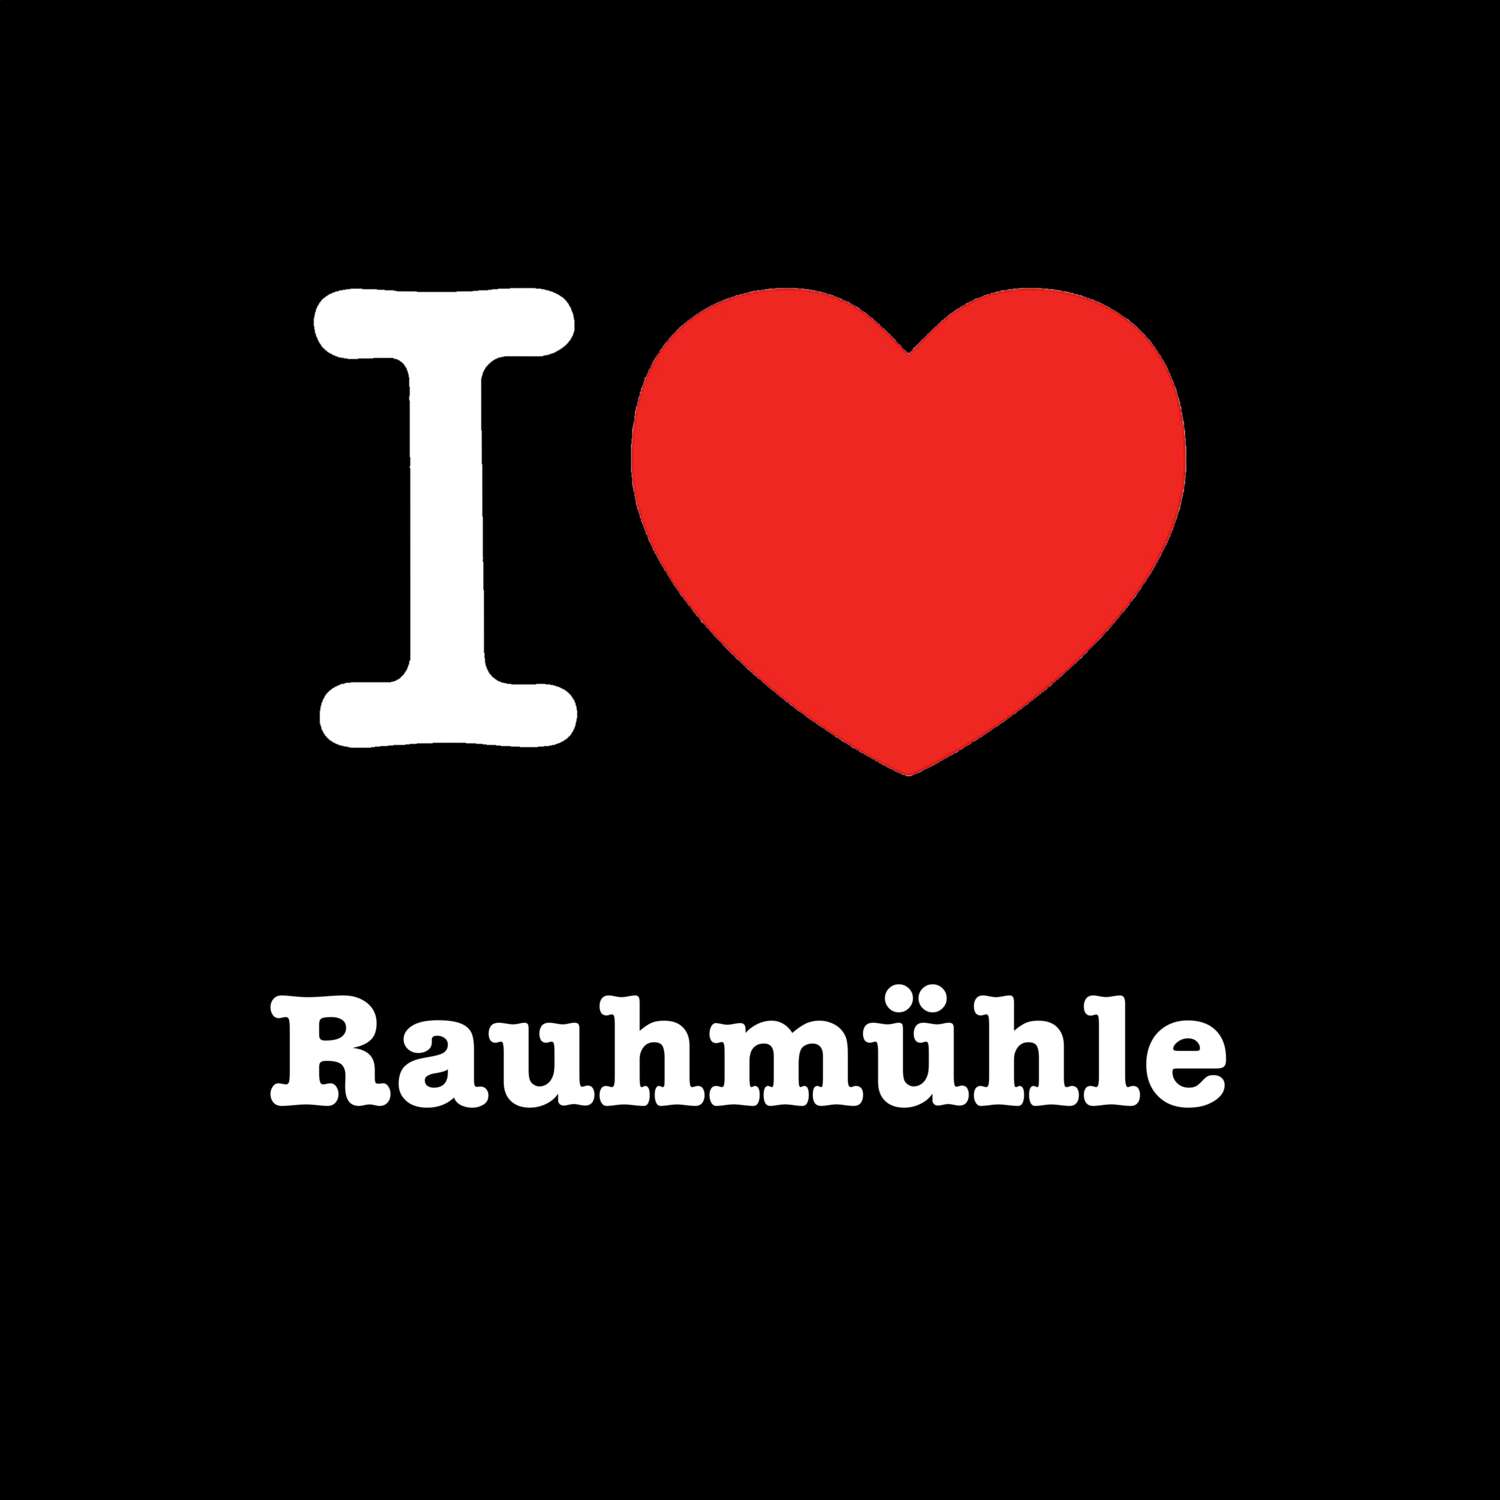 Rauhmühle T-Shirt »I love«